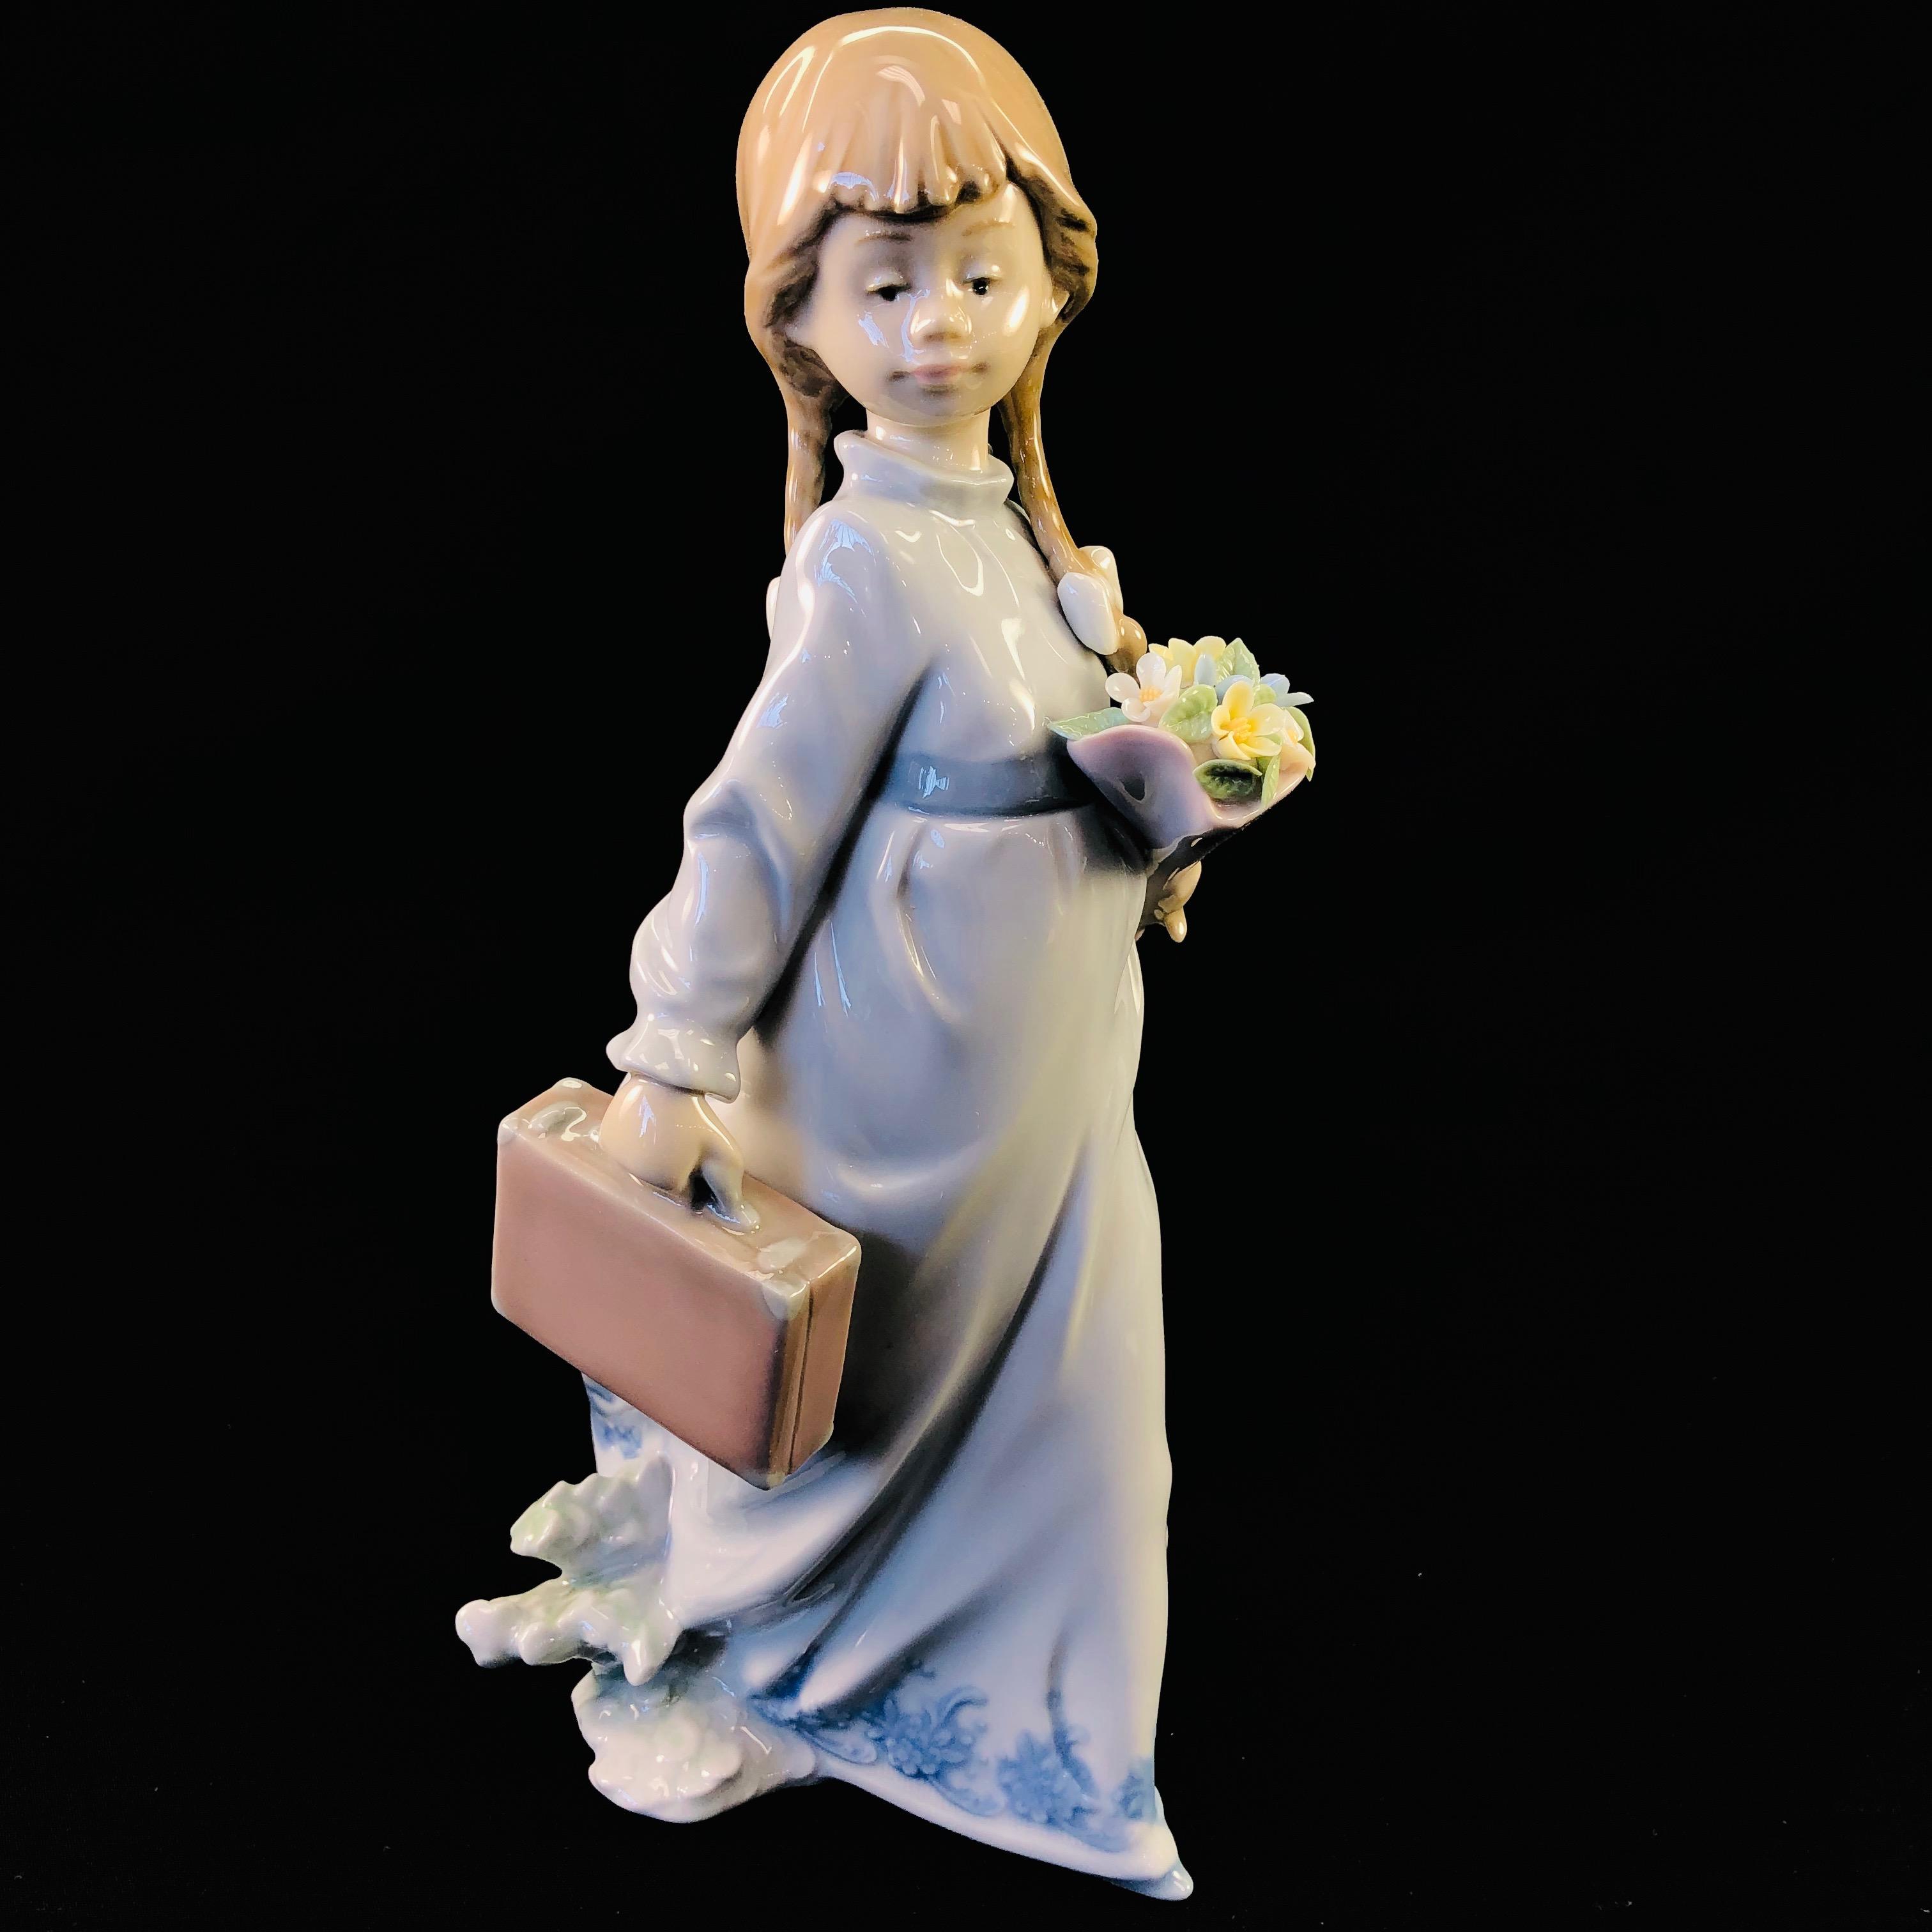 Estate Lladro #7604 "School Days" porcelain figurine with original box